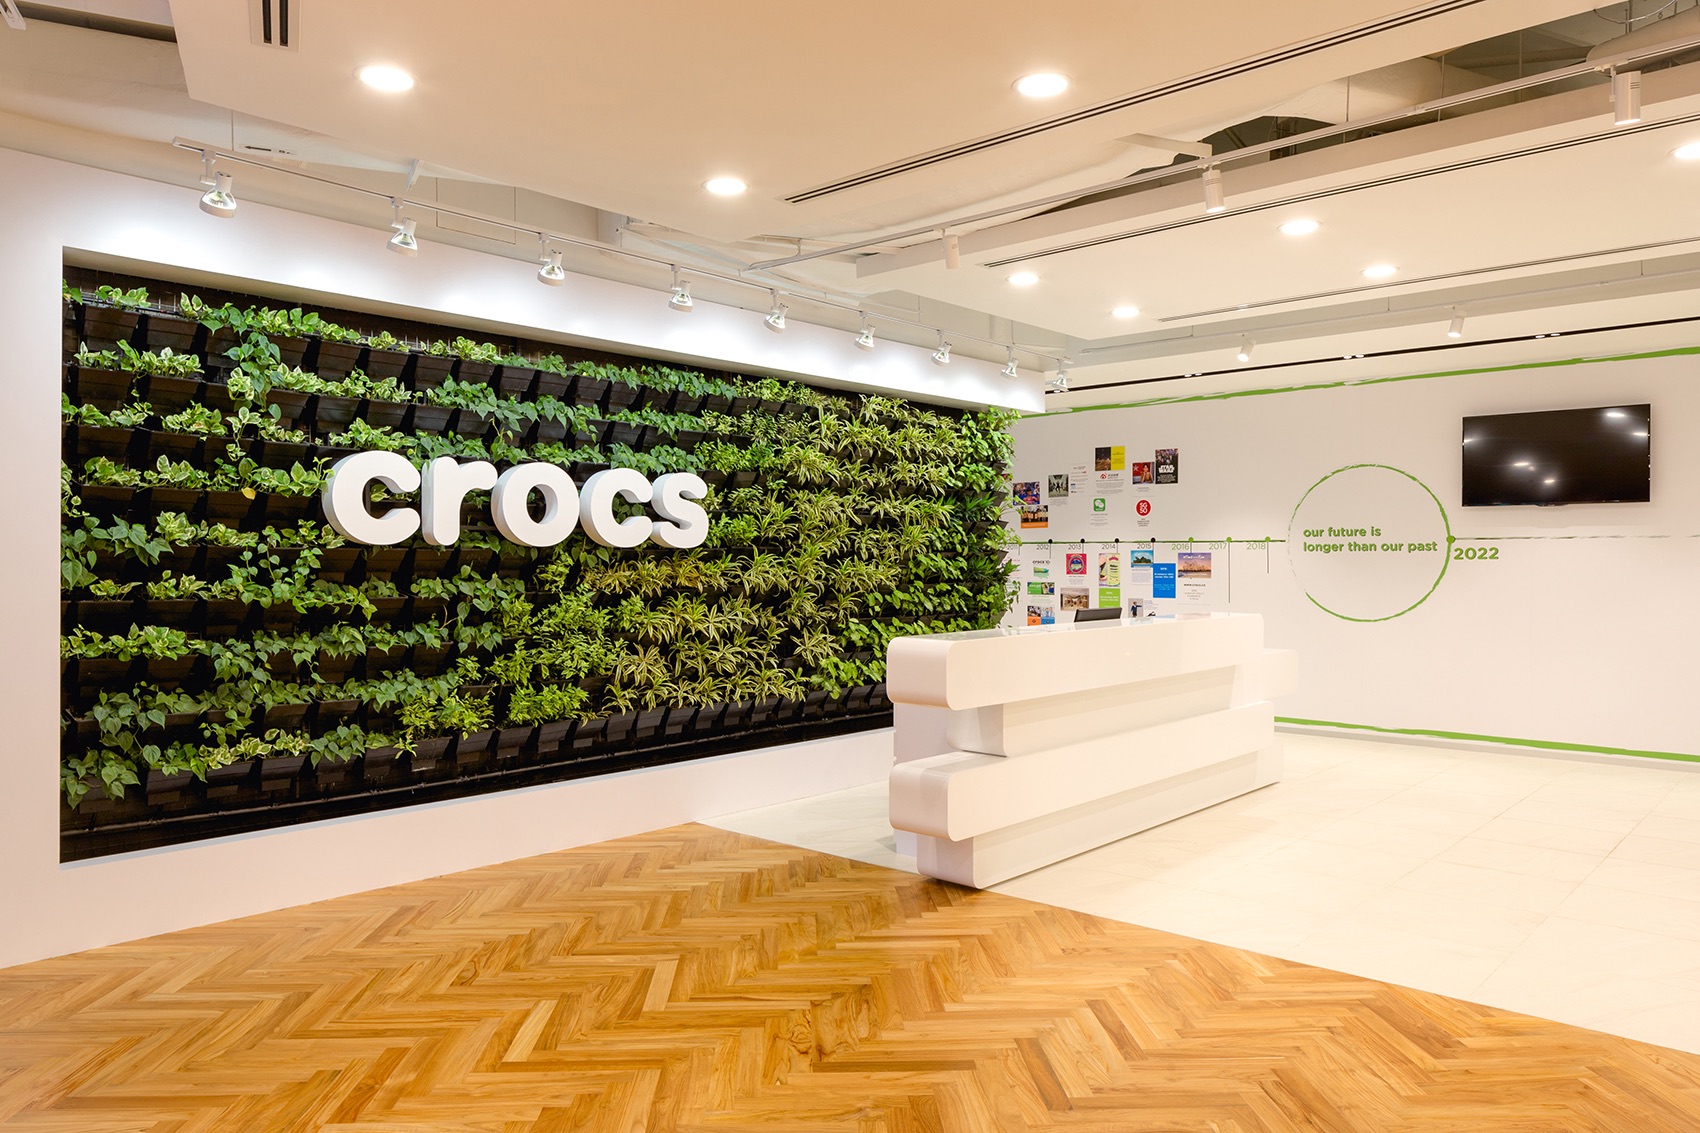 crocs corporate headquarters